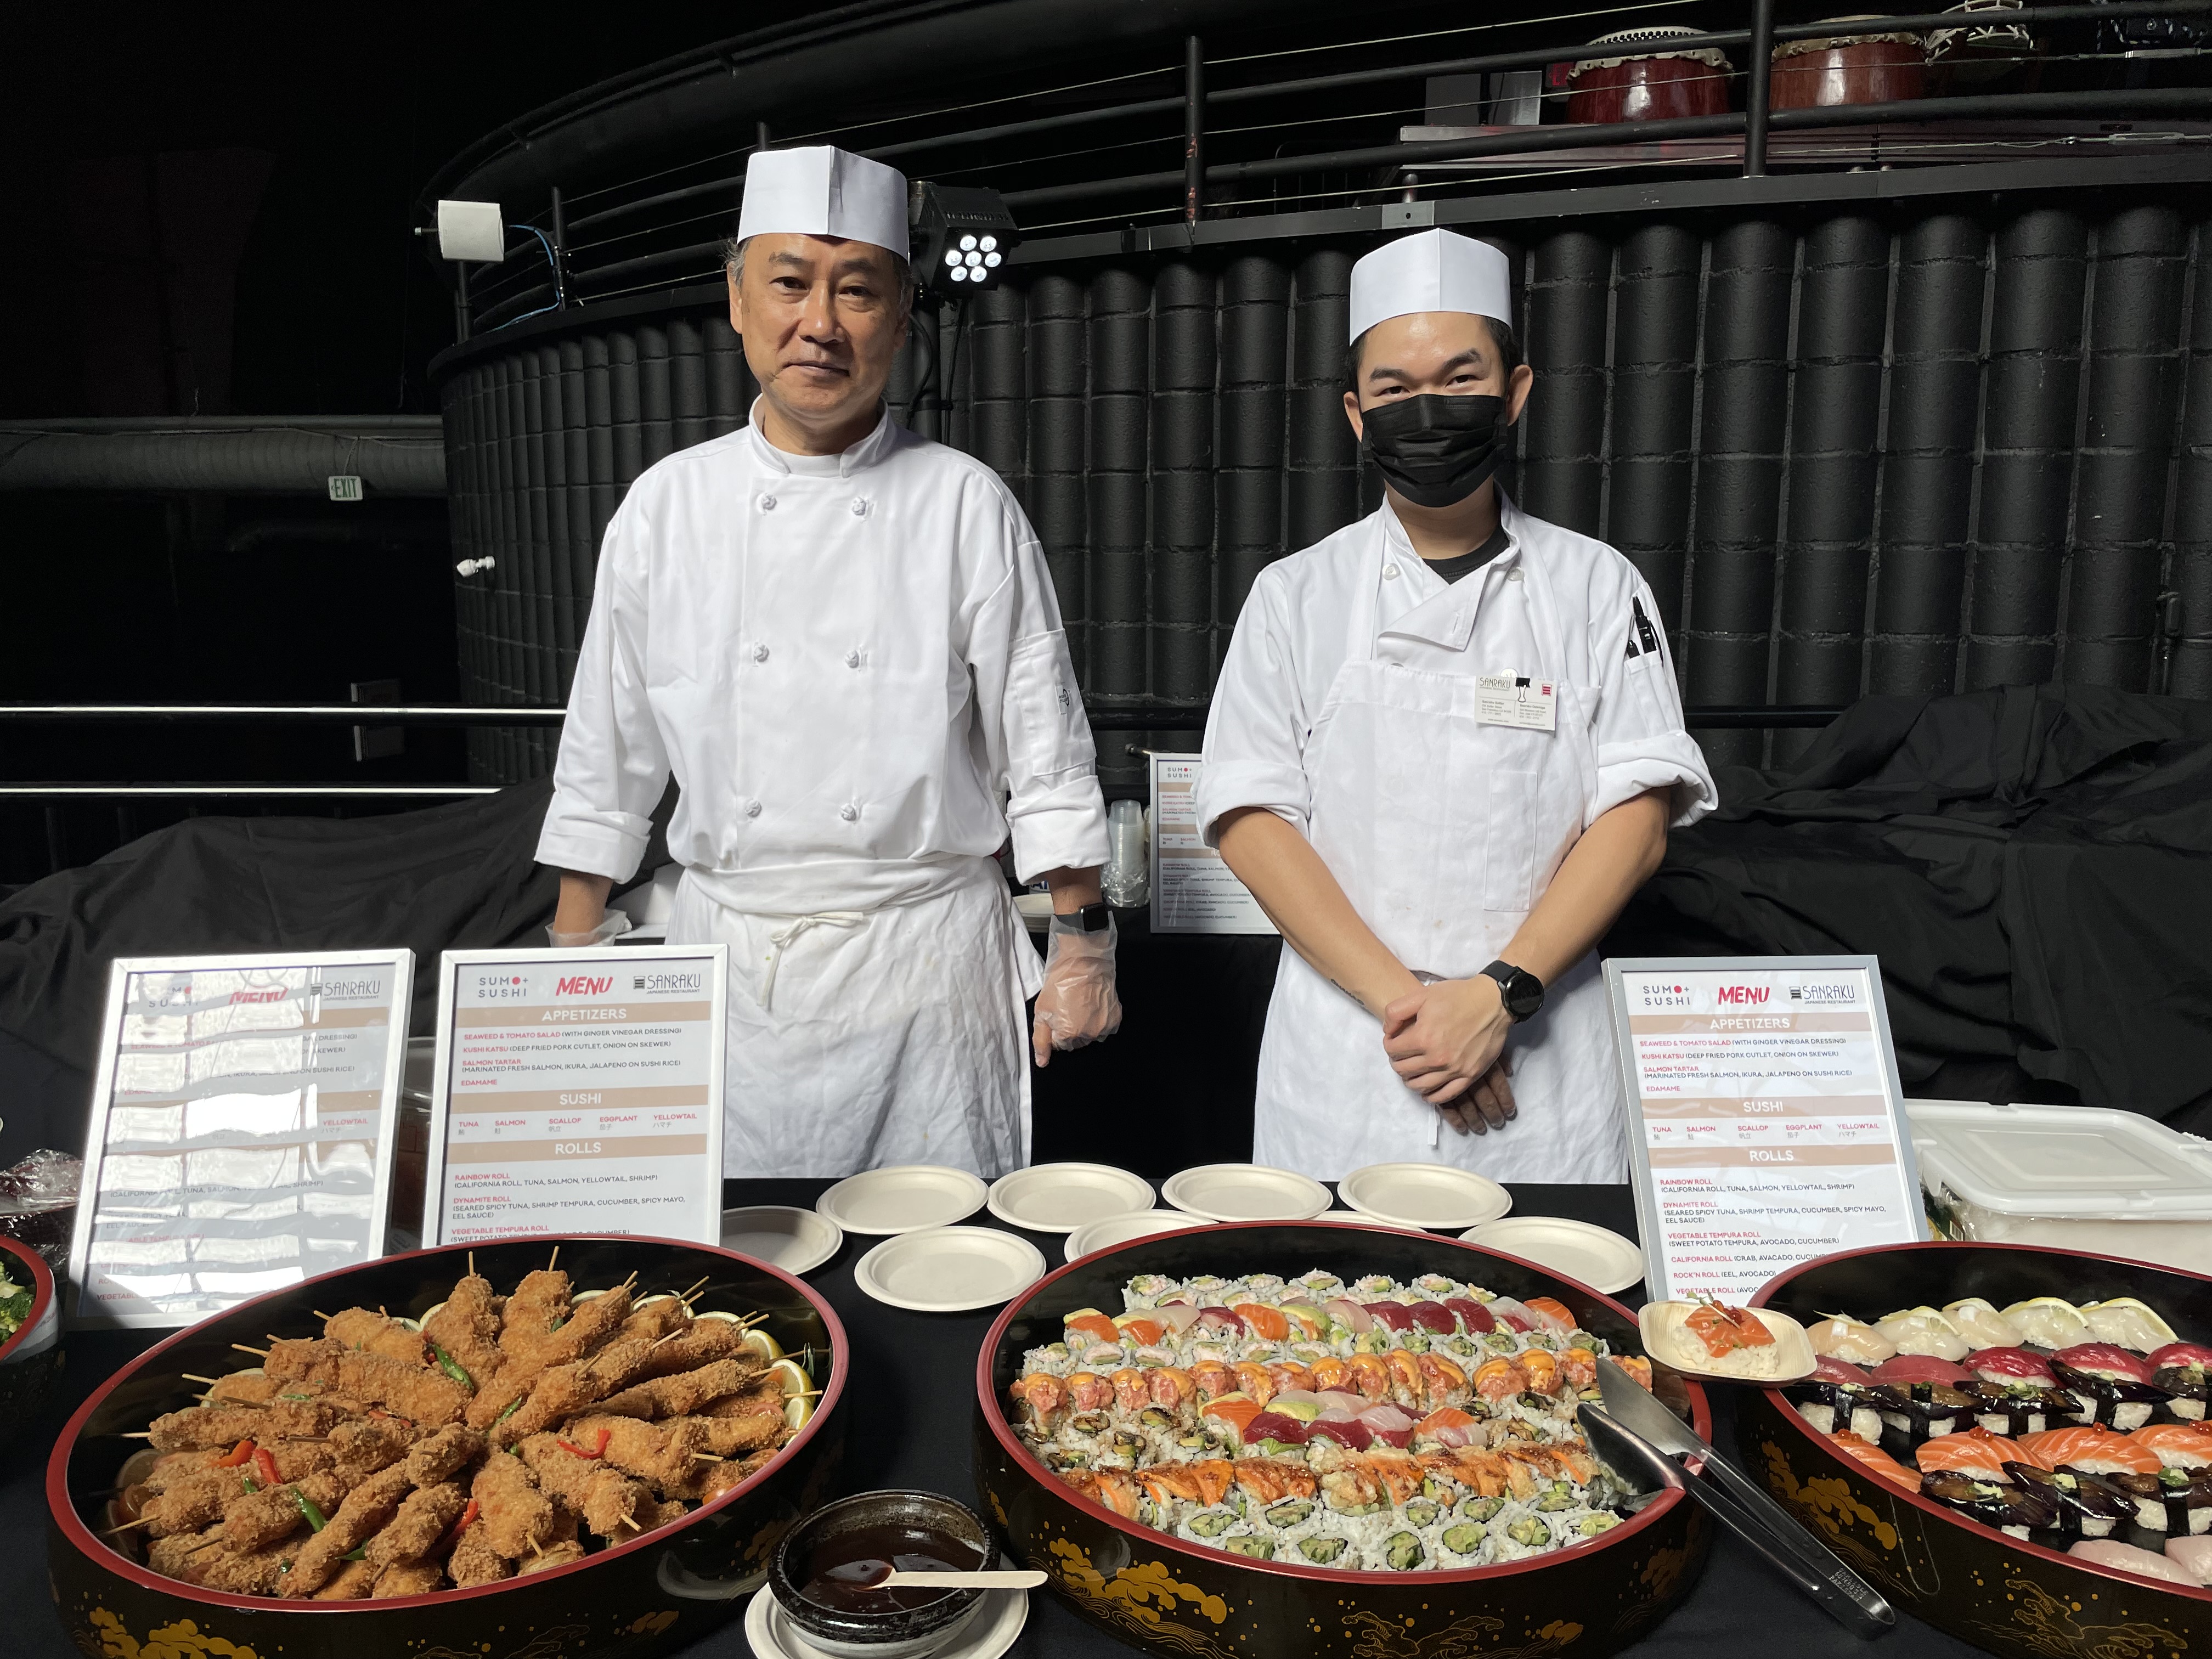 Sanraku at Sumo and Sushi Event